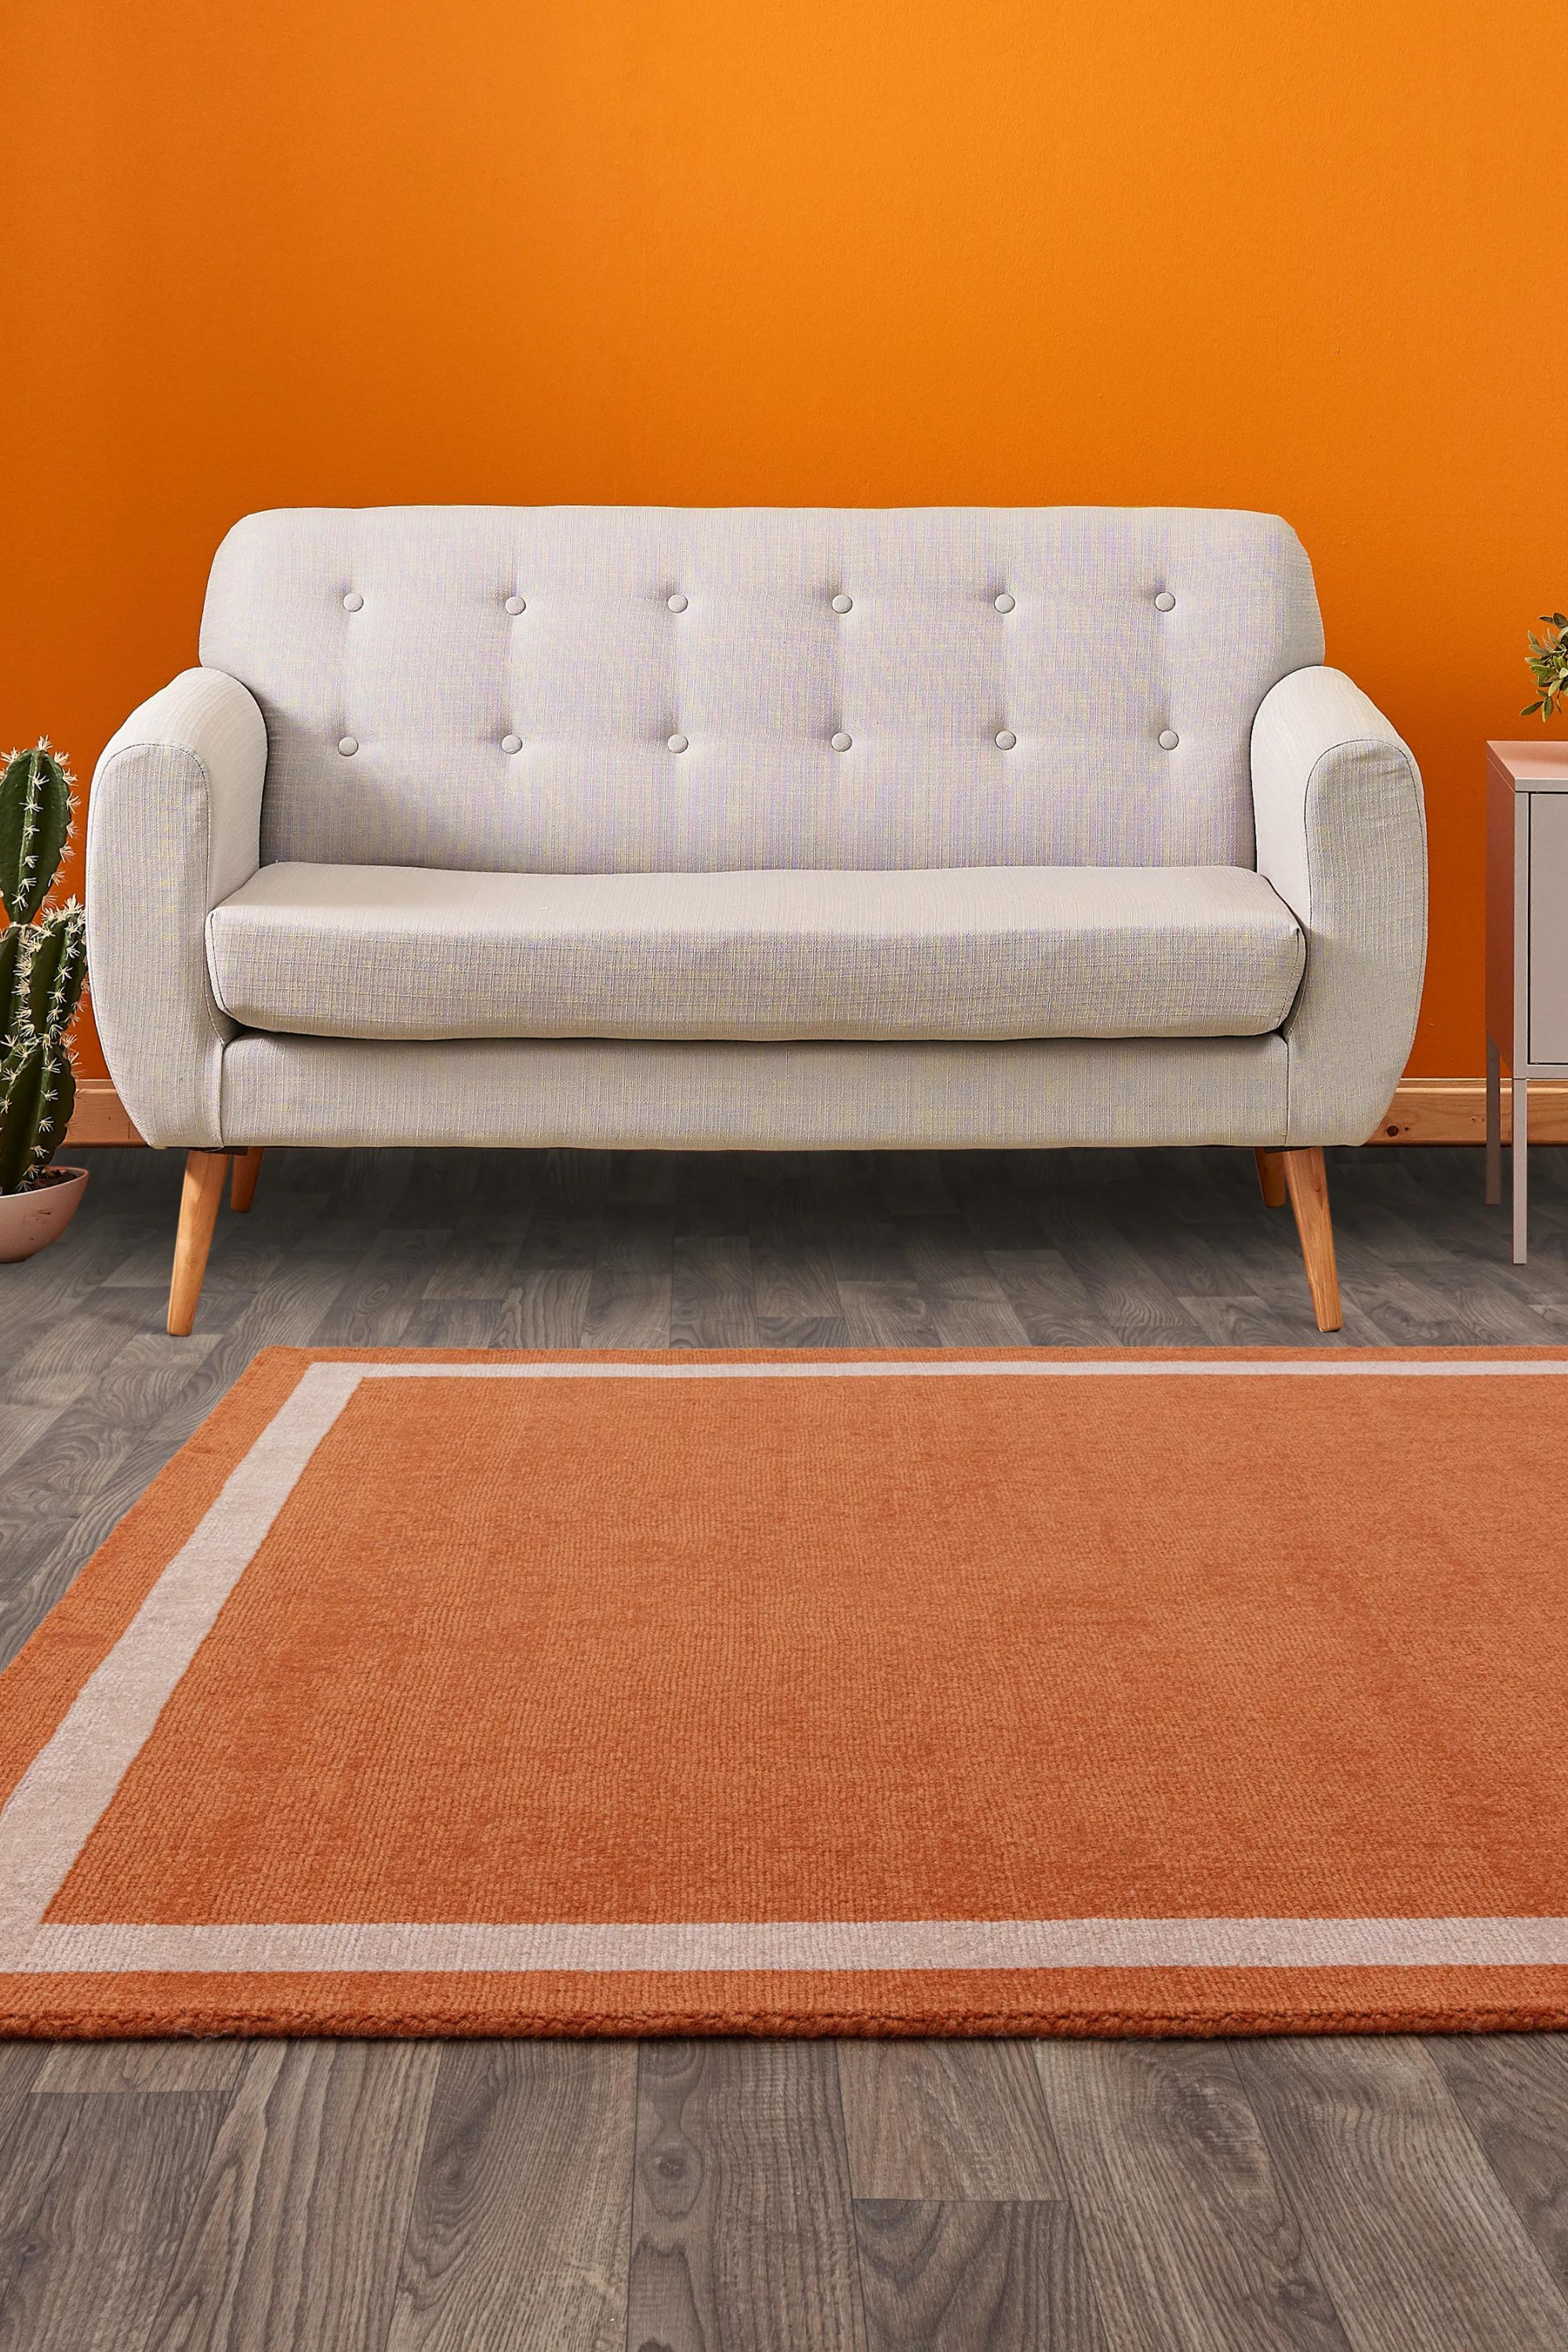 Modern orange border style rug